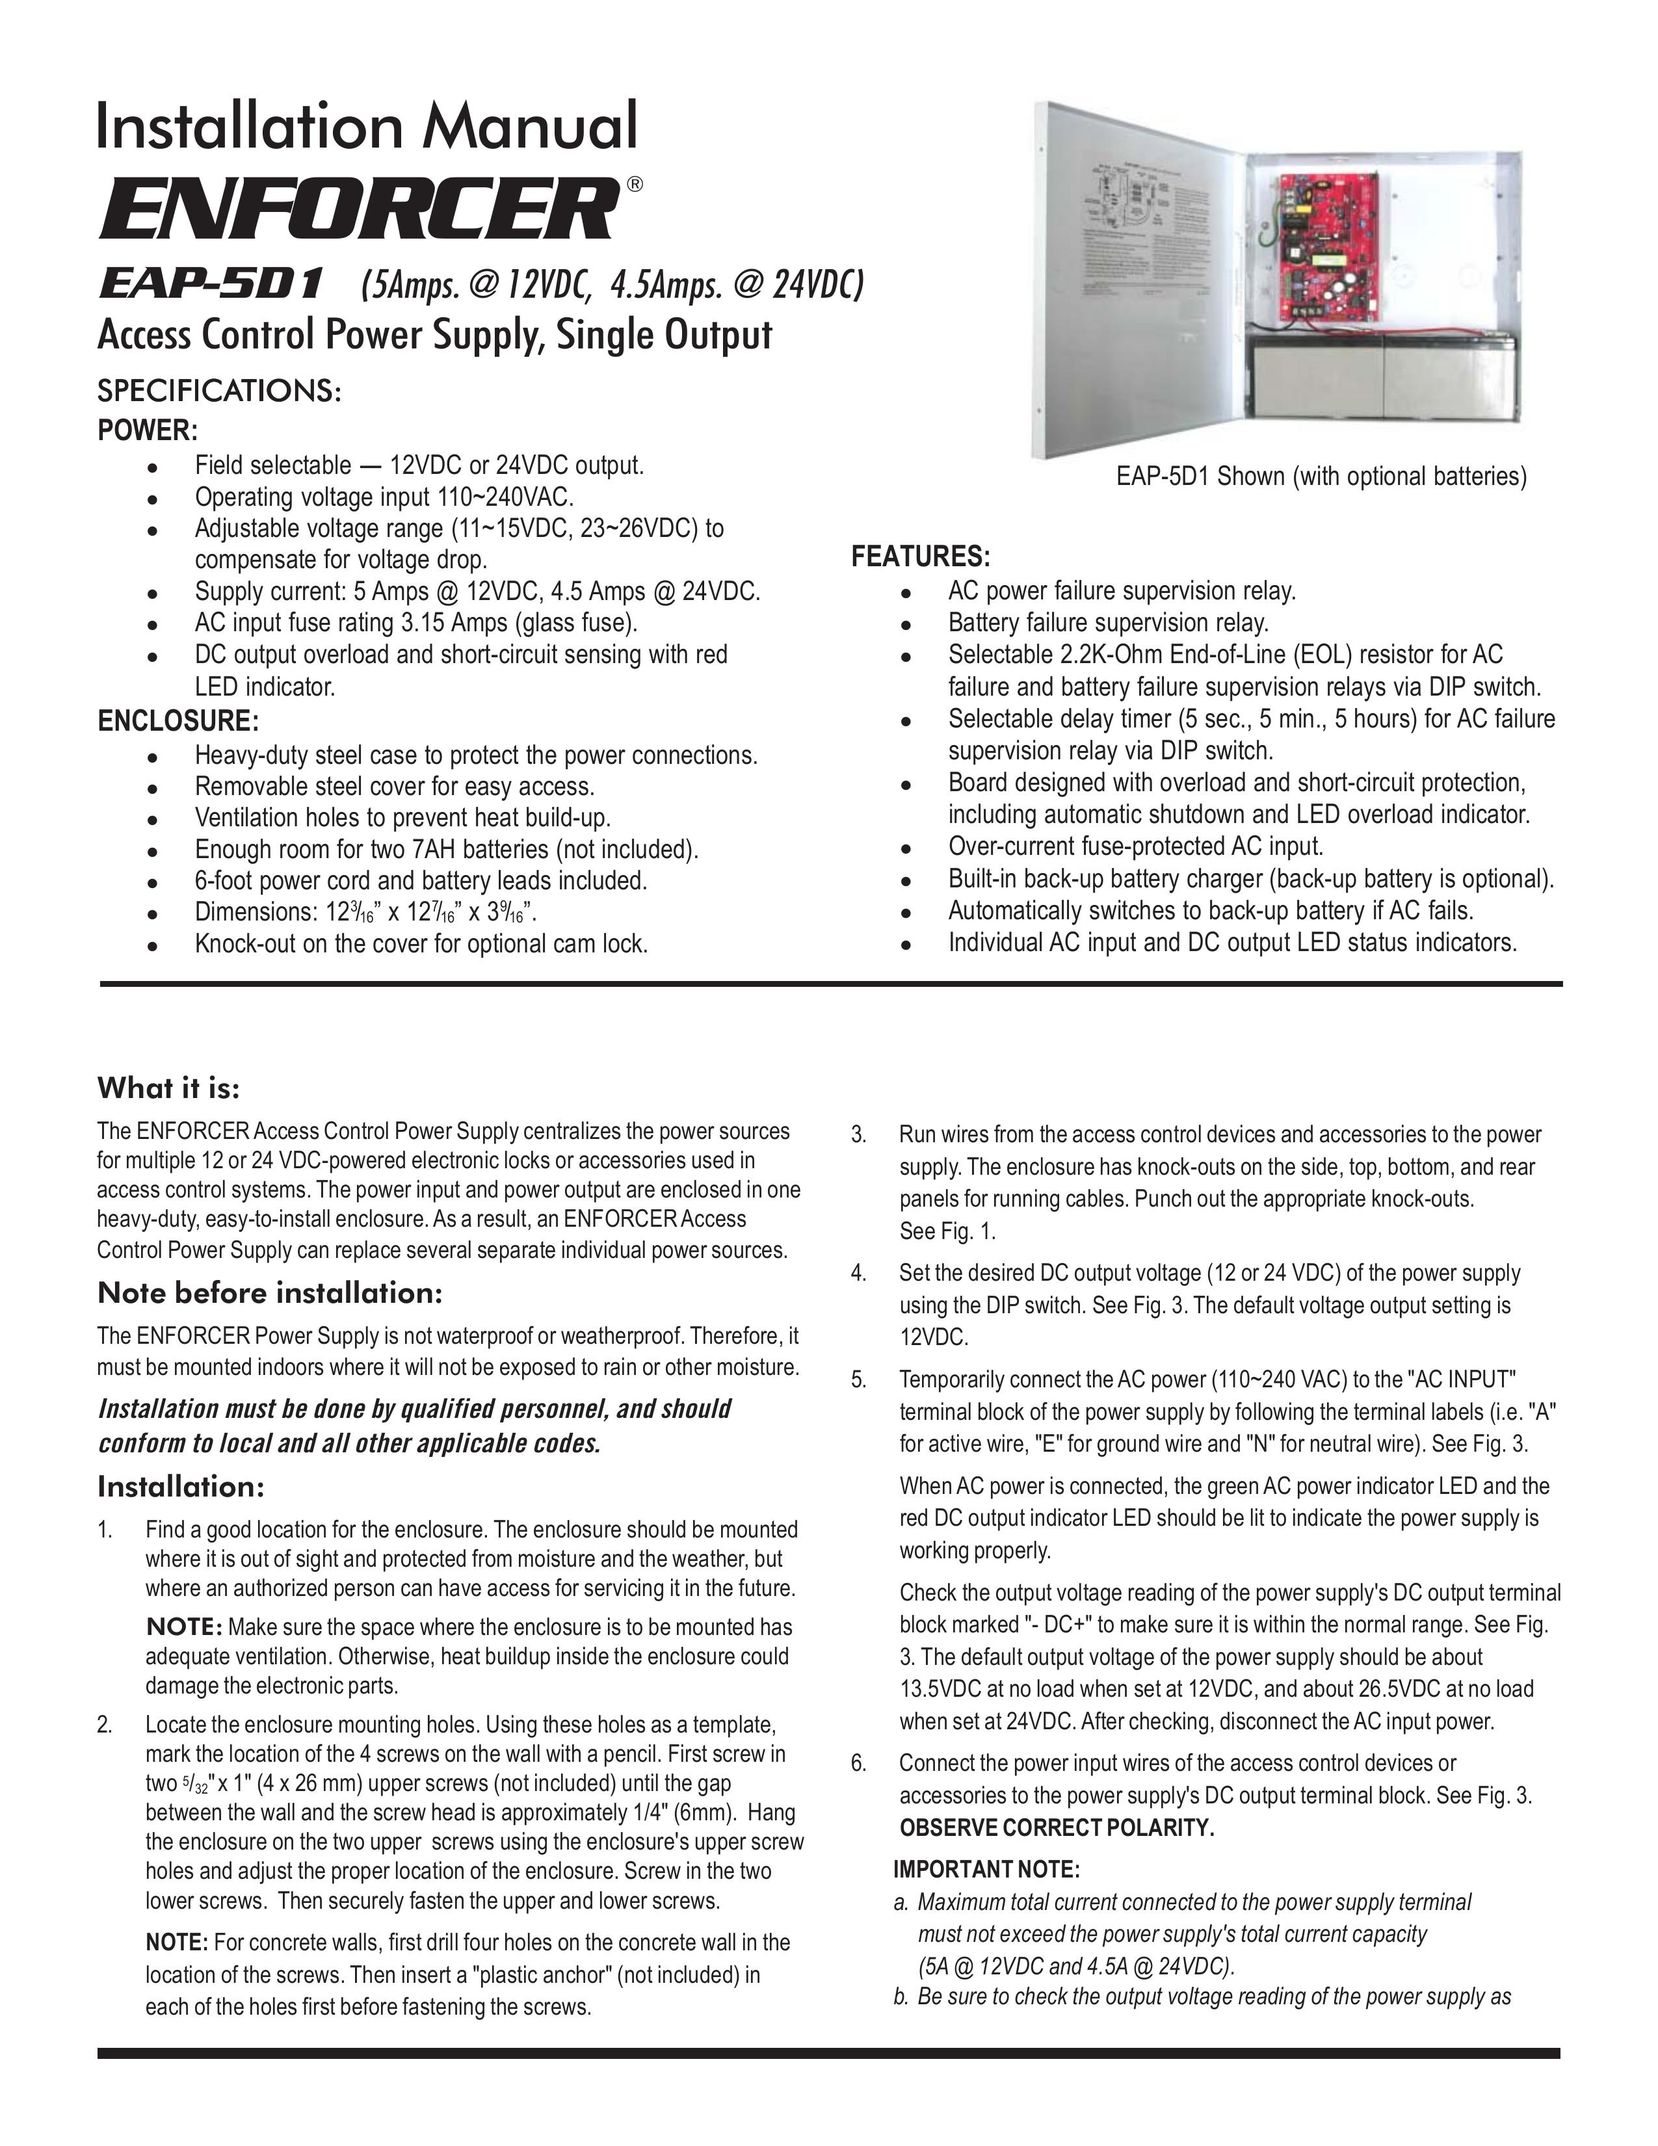 SECO-LARM USA EAP-5D1 Power Supply User Manual